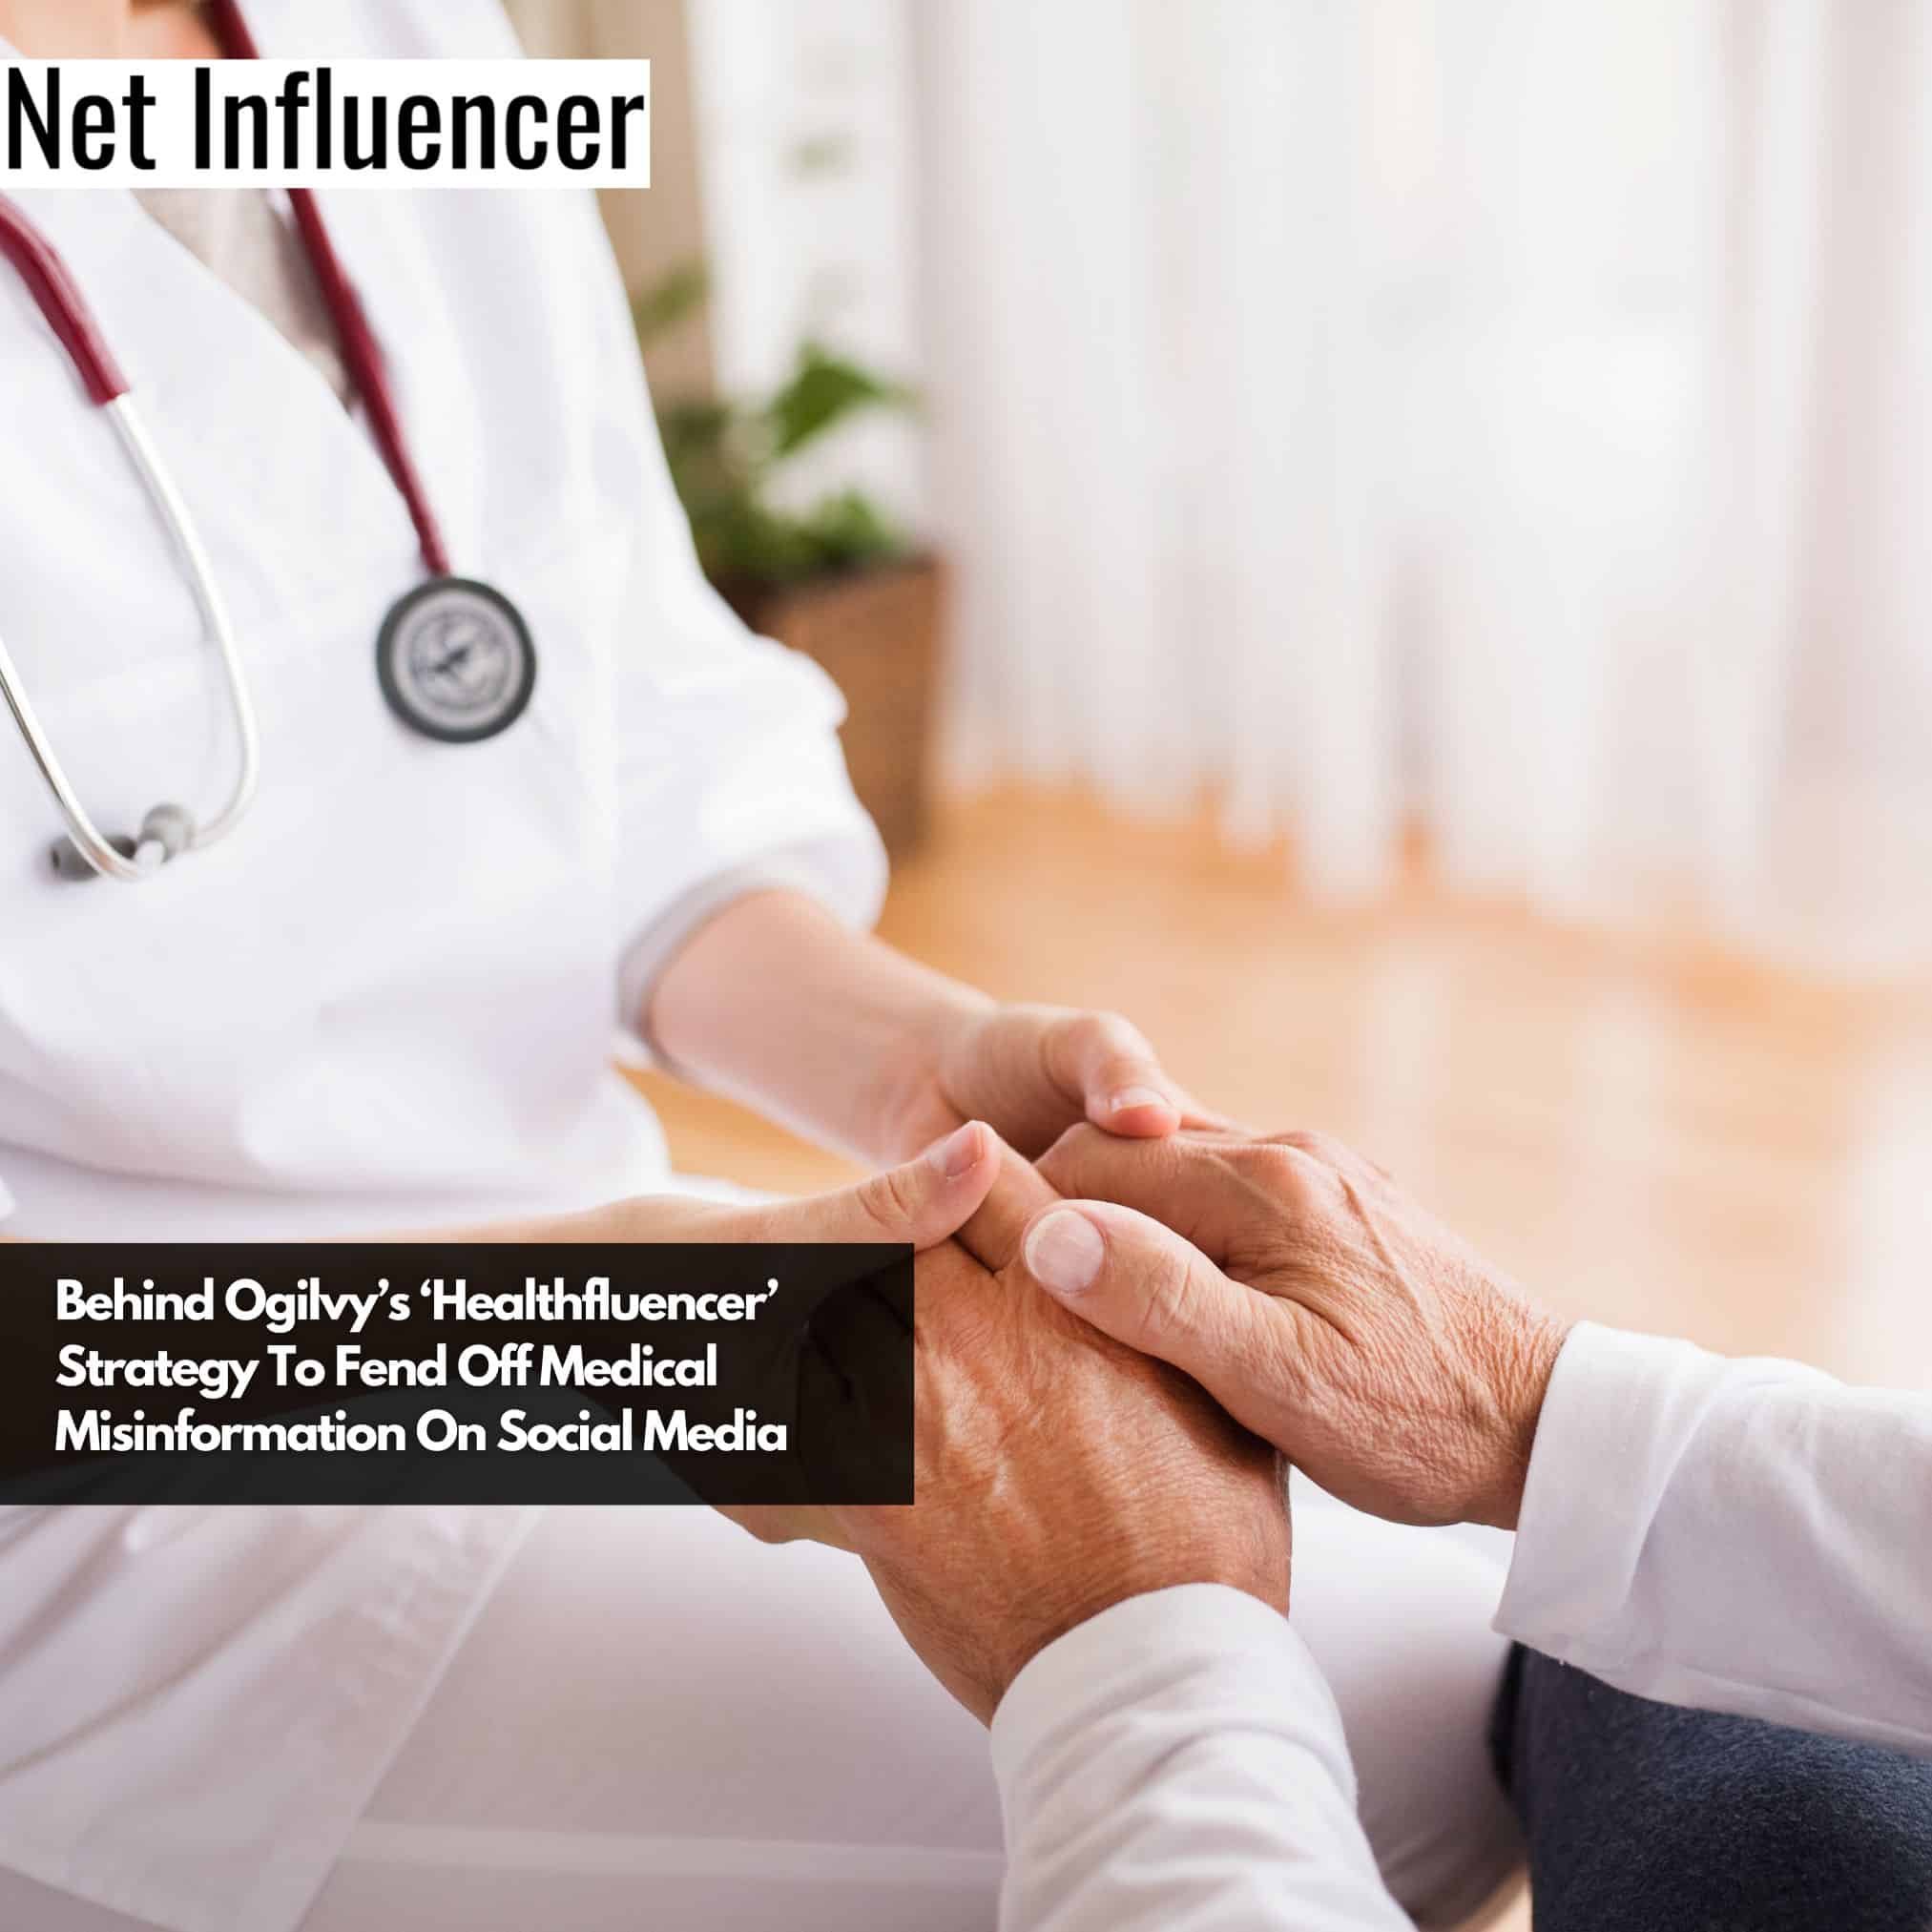 Behind Ogilvy’s ‘Healthfluencer’ Strategy To Fend Off Medical Misinformation On Social Media